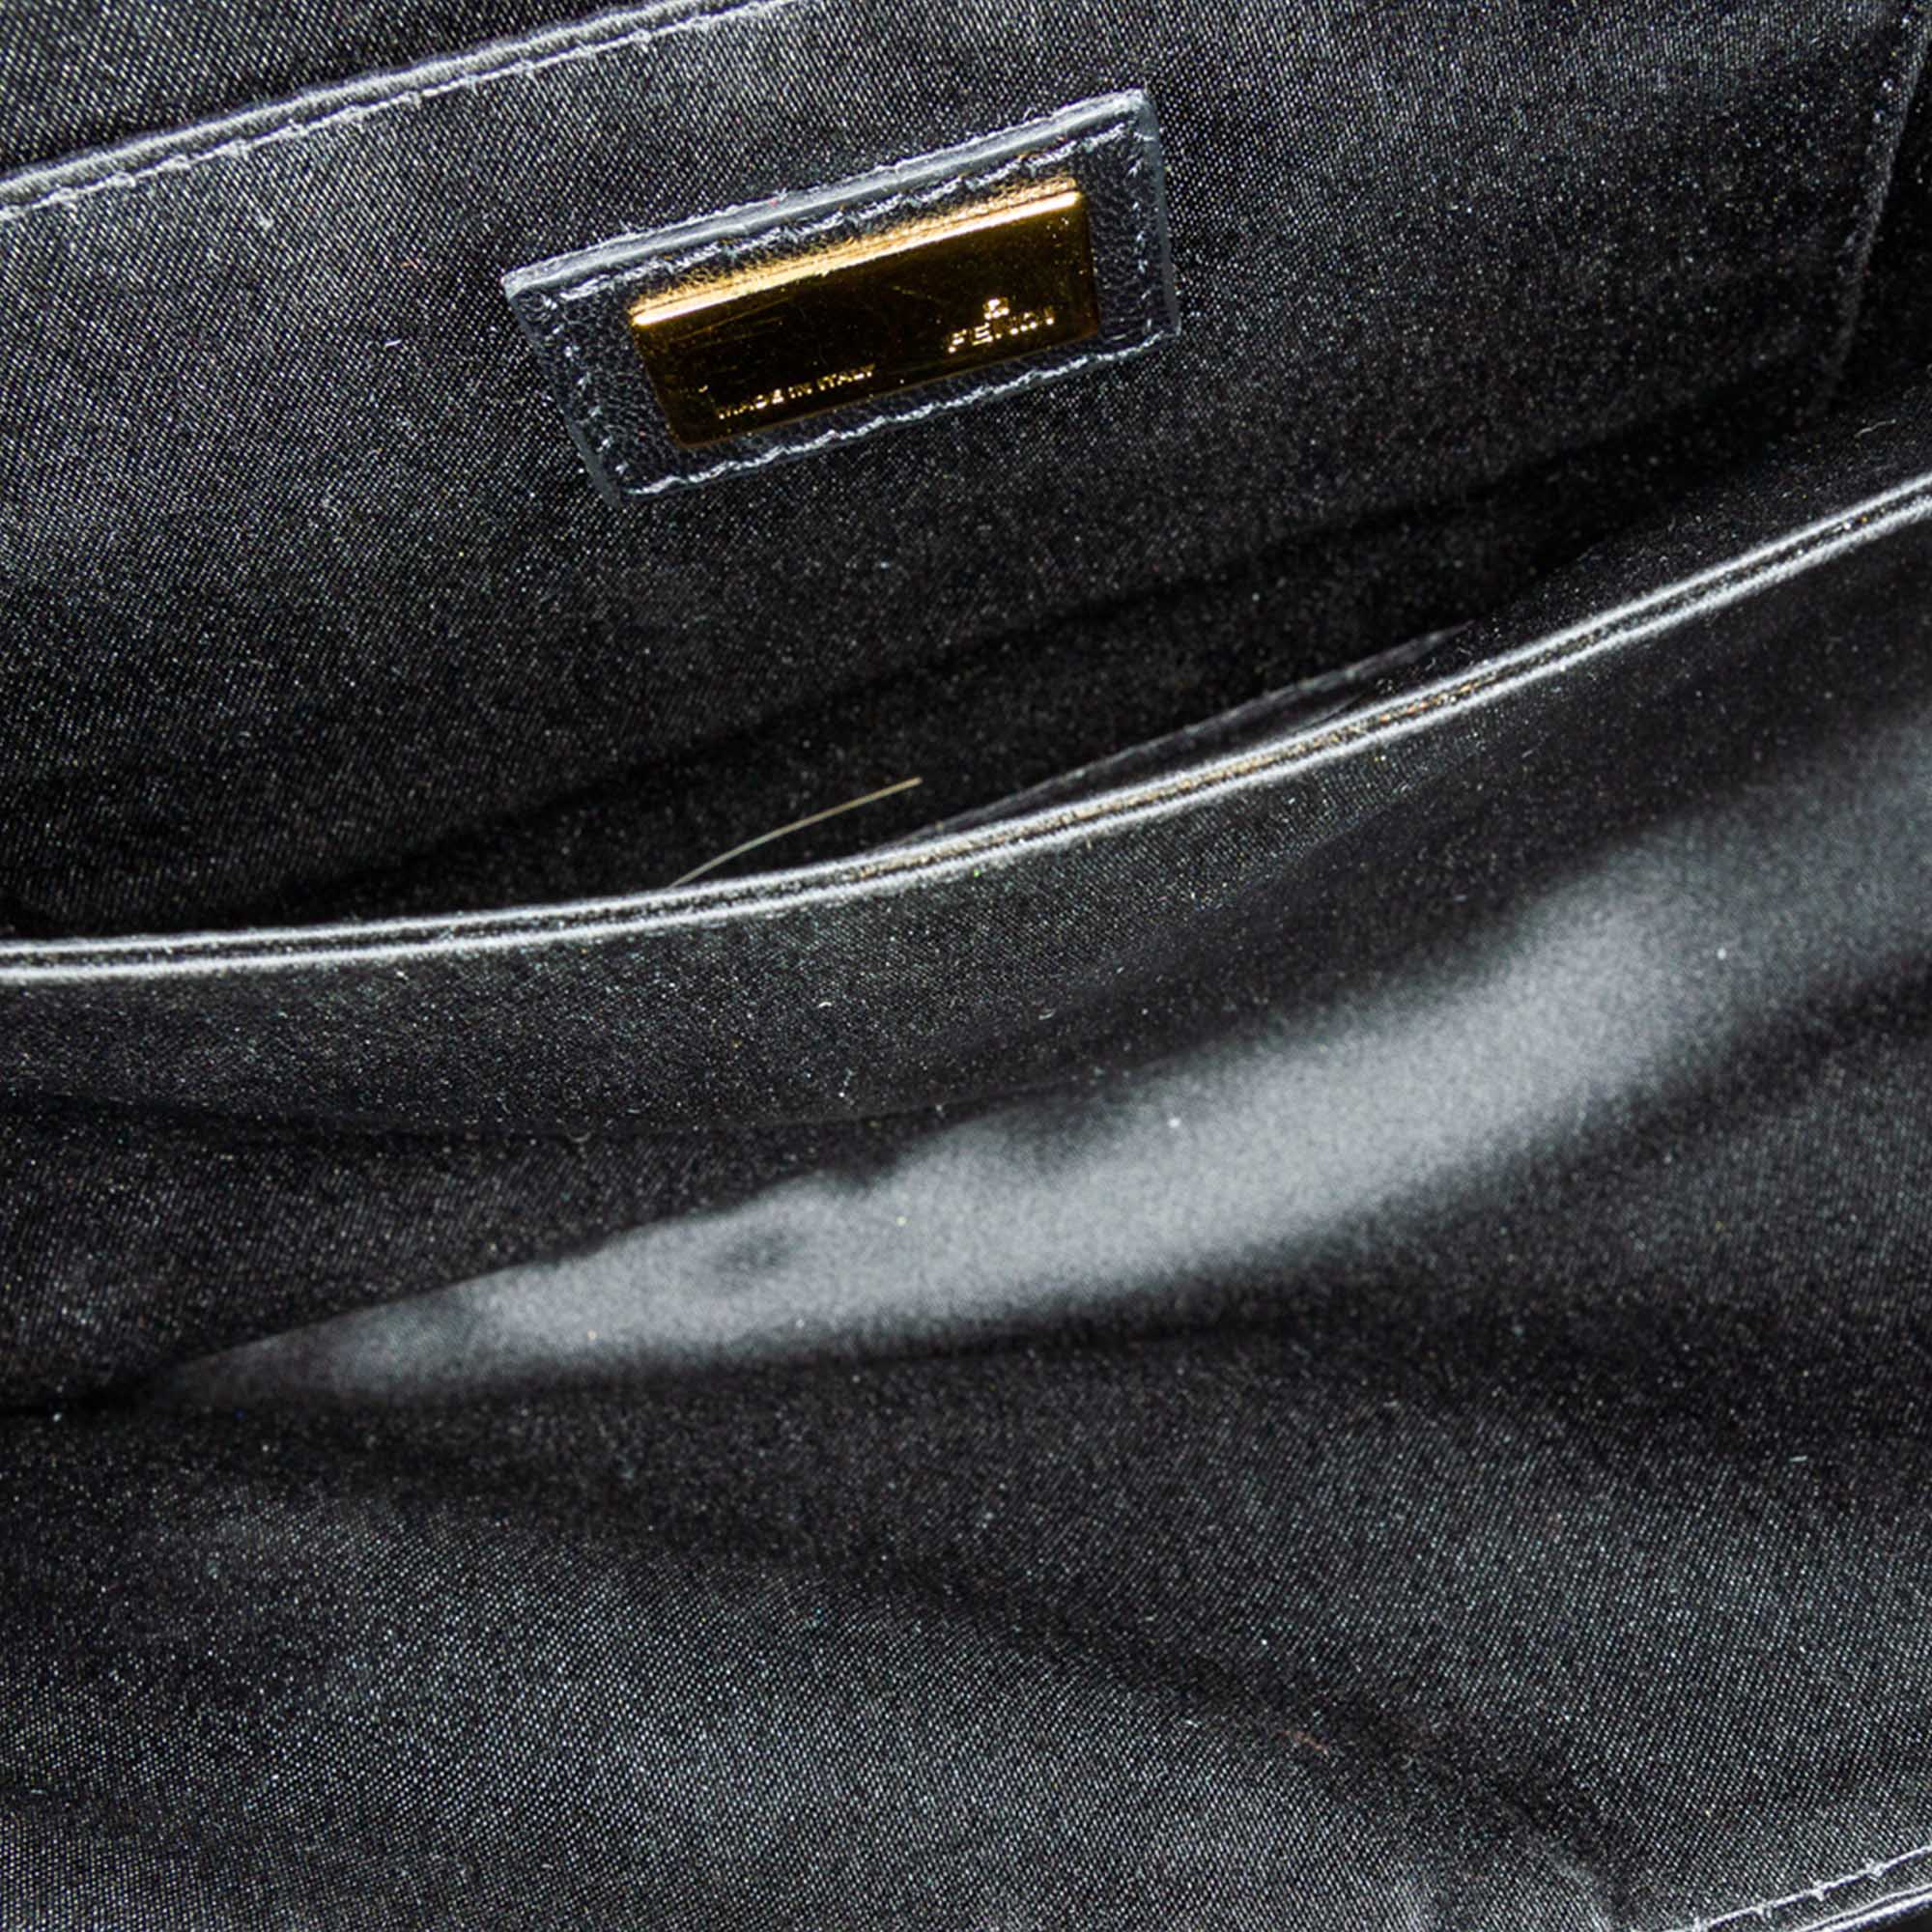 Fendi Leather Clutch Bag - Image 10 of 11